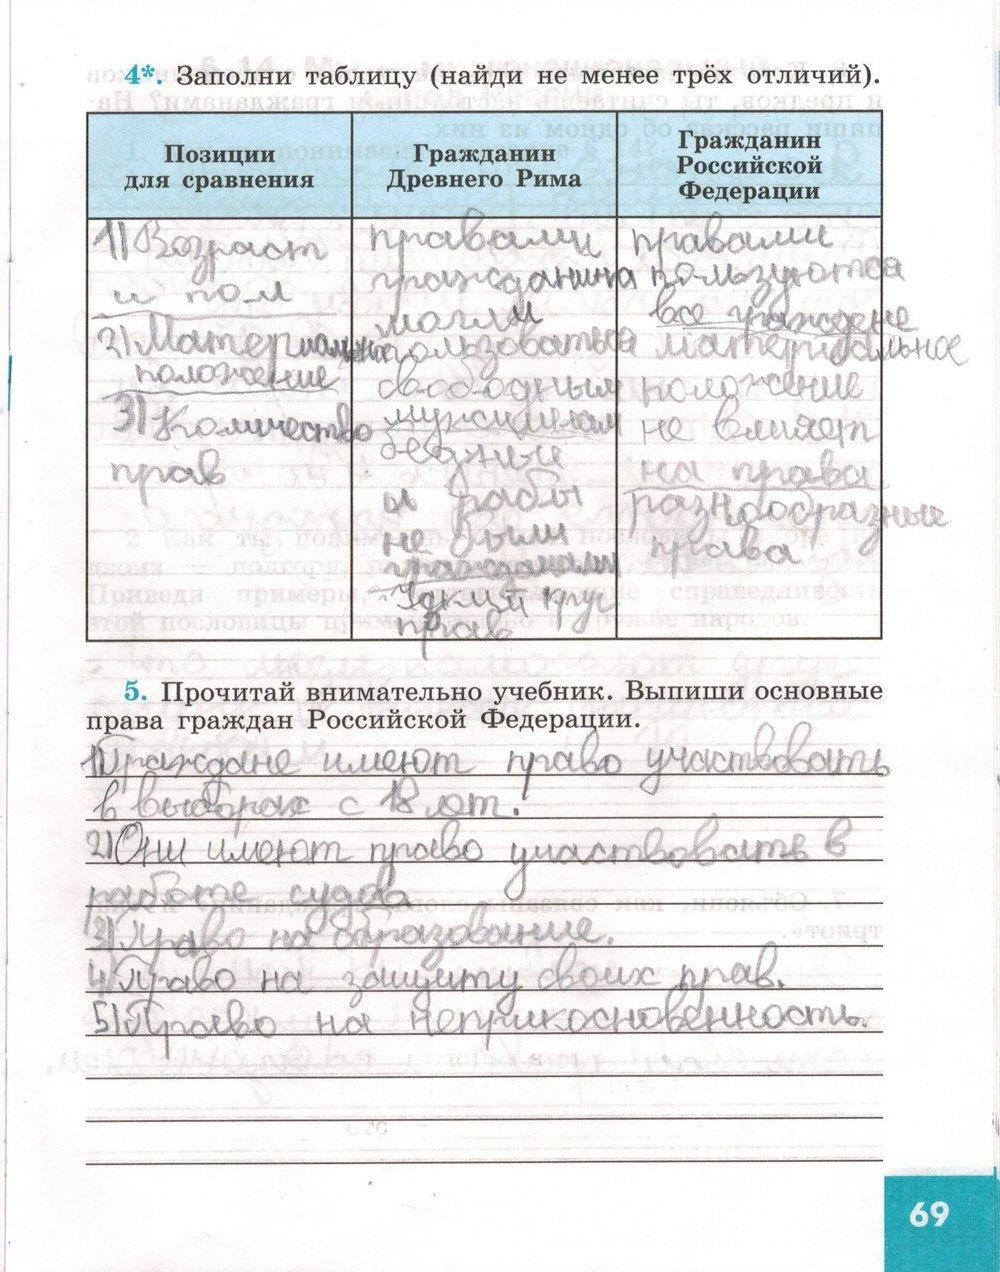 гдз 5 класс рабочая тетрадь страница 69 обществознание Иванова, Хотеенкова